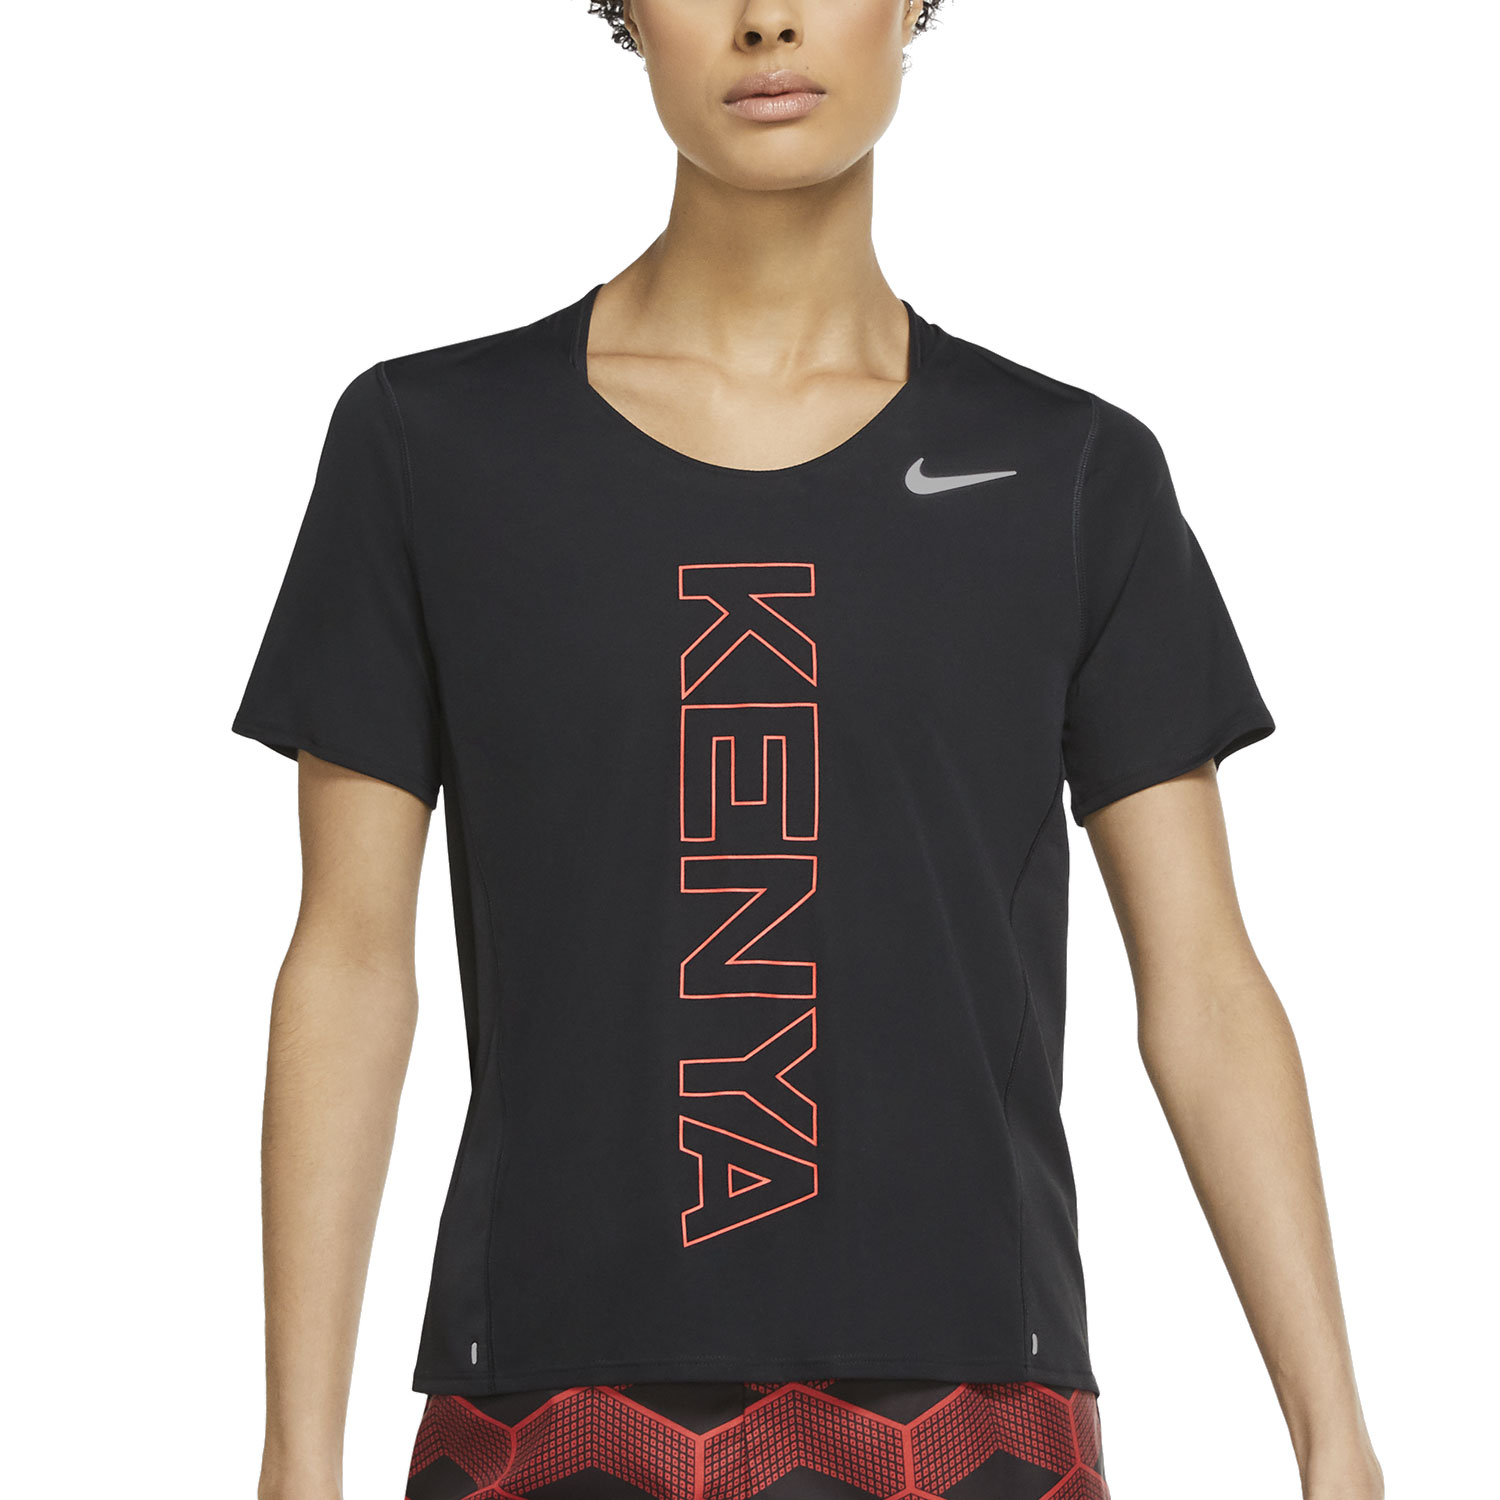 Nike Team Kenya City Sleek Camiseta Running Mujer Black